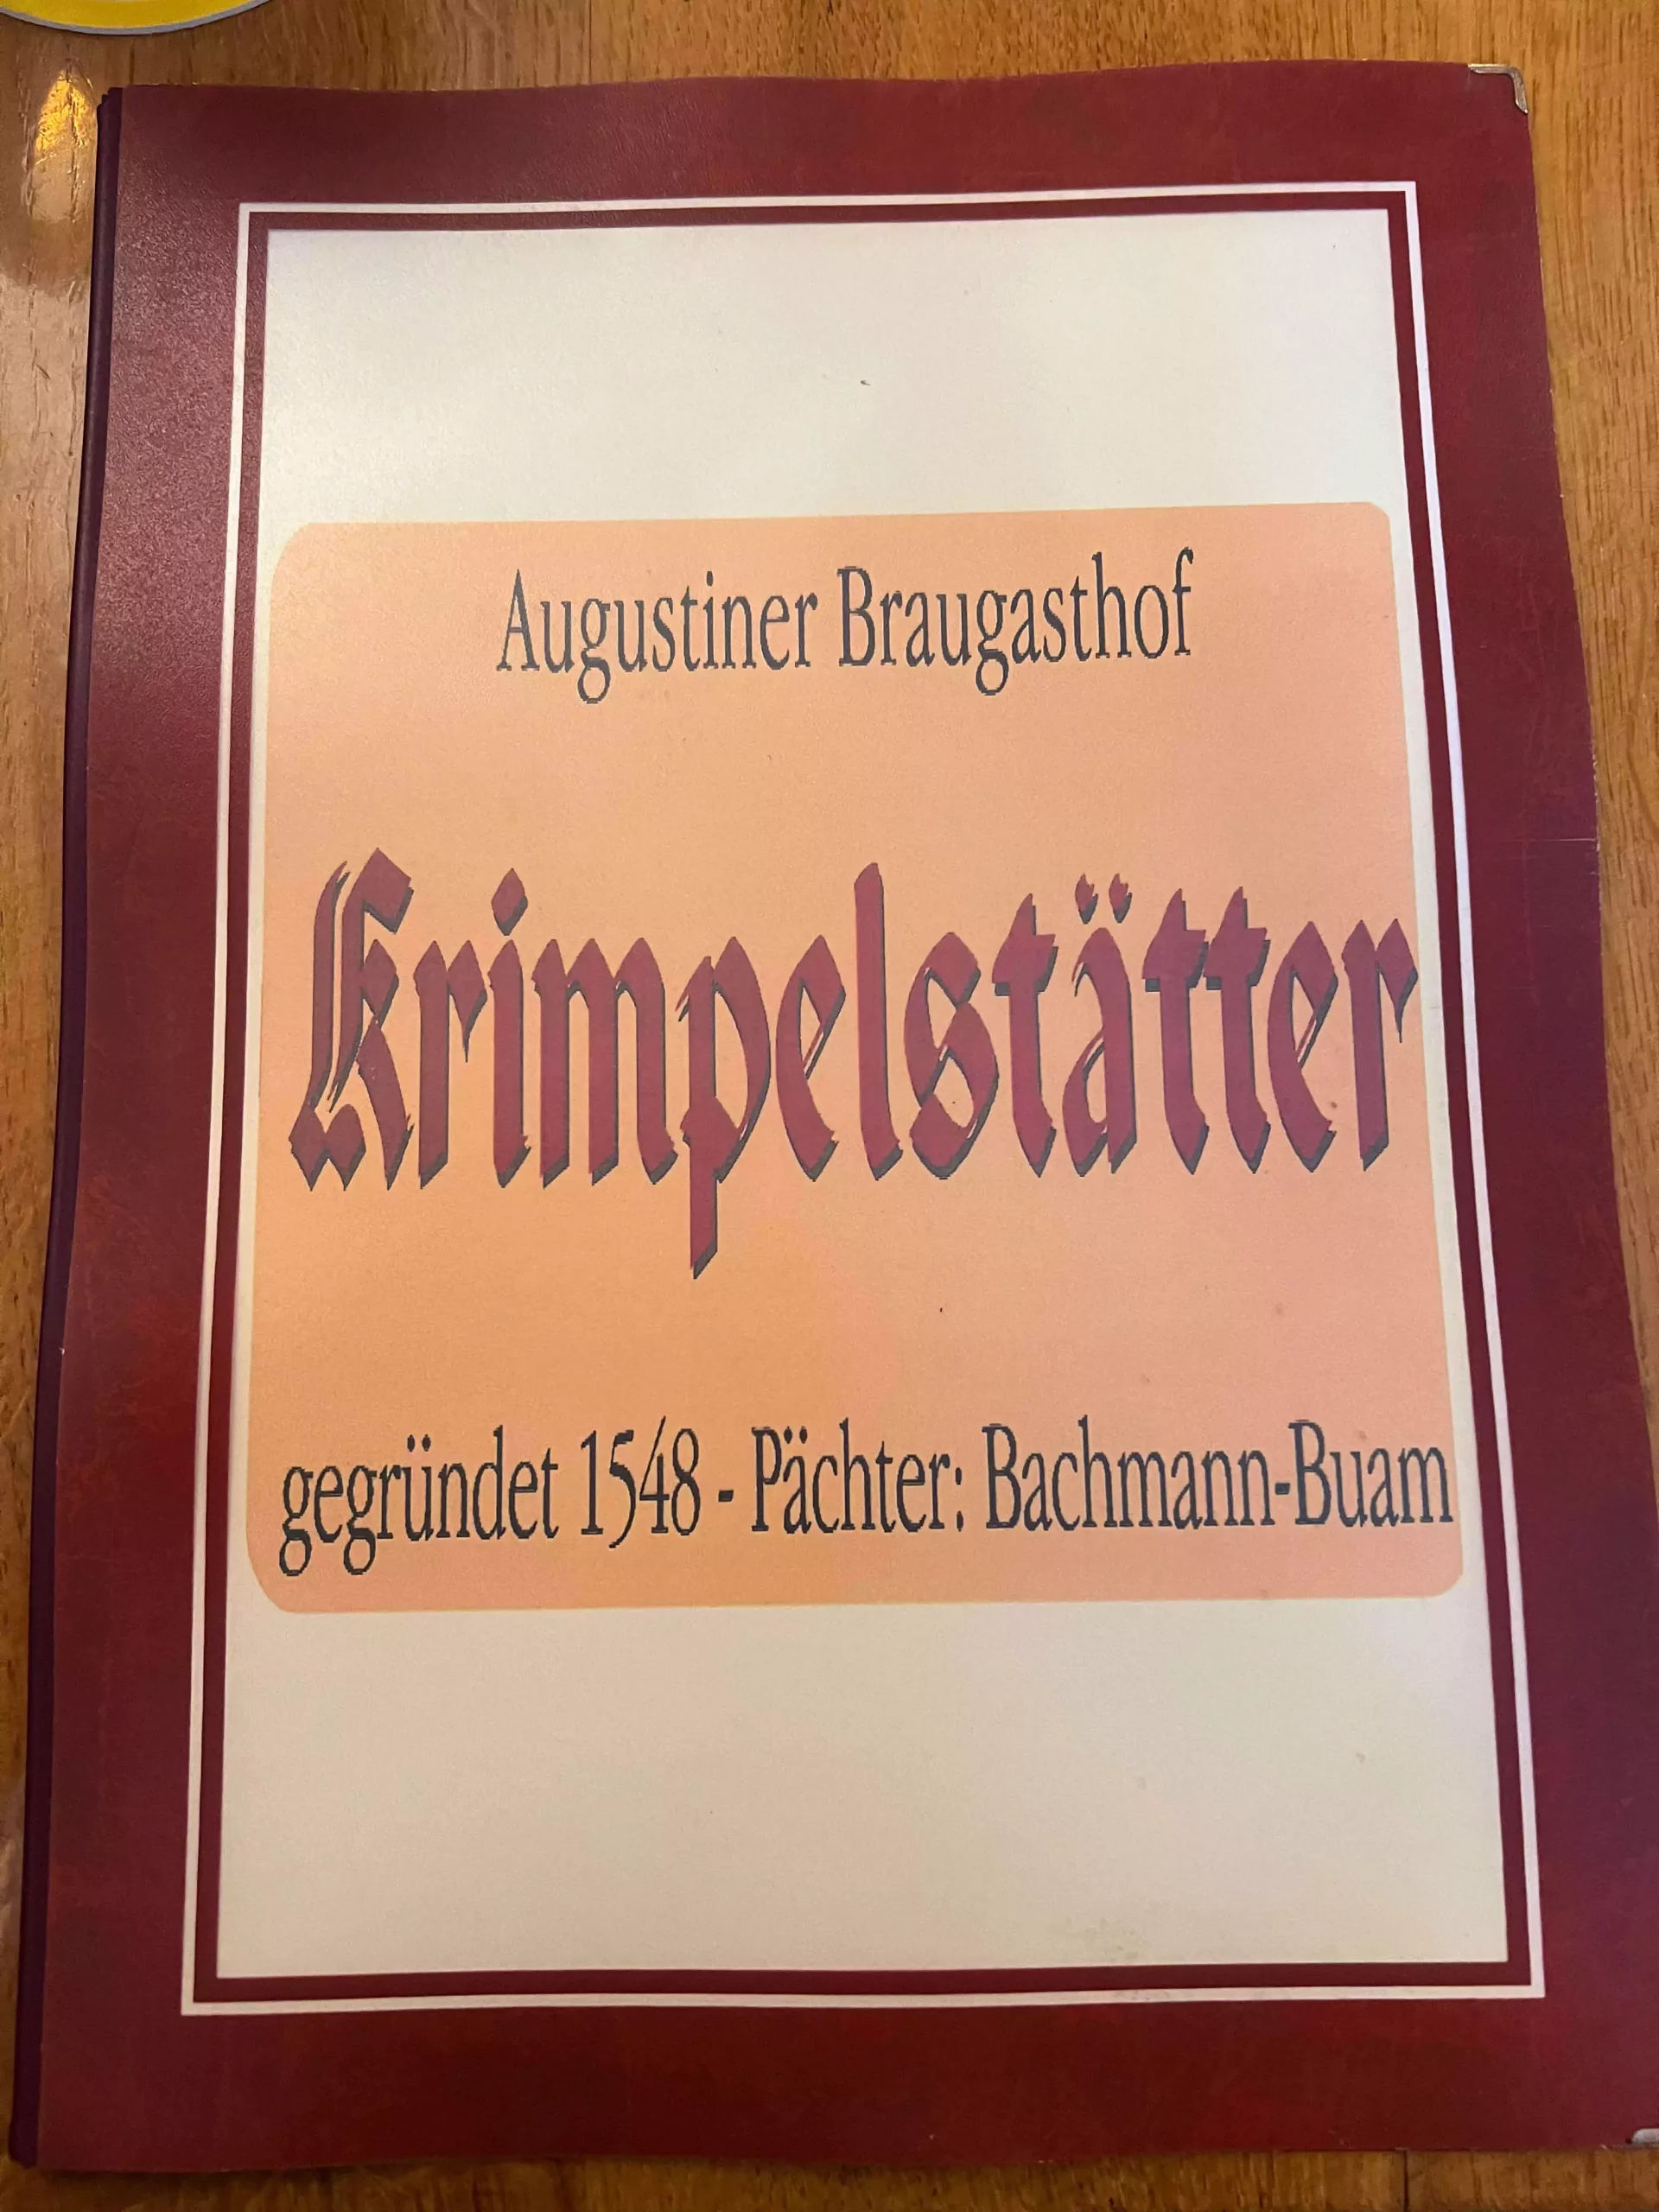 Augustiner Braugasthof Krimpelstätter menu